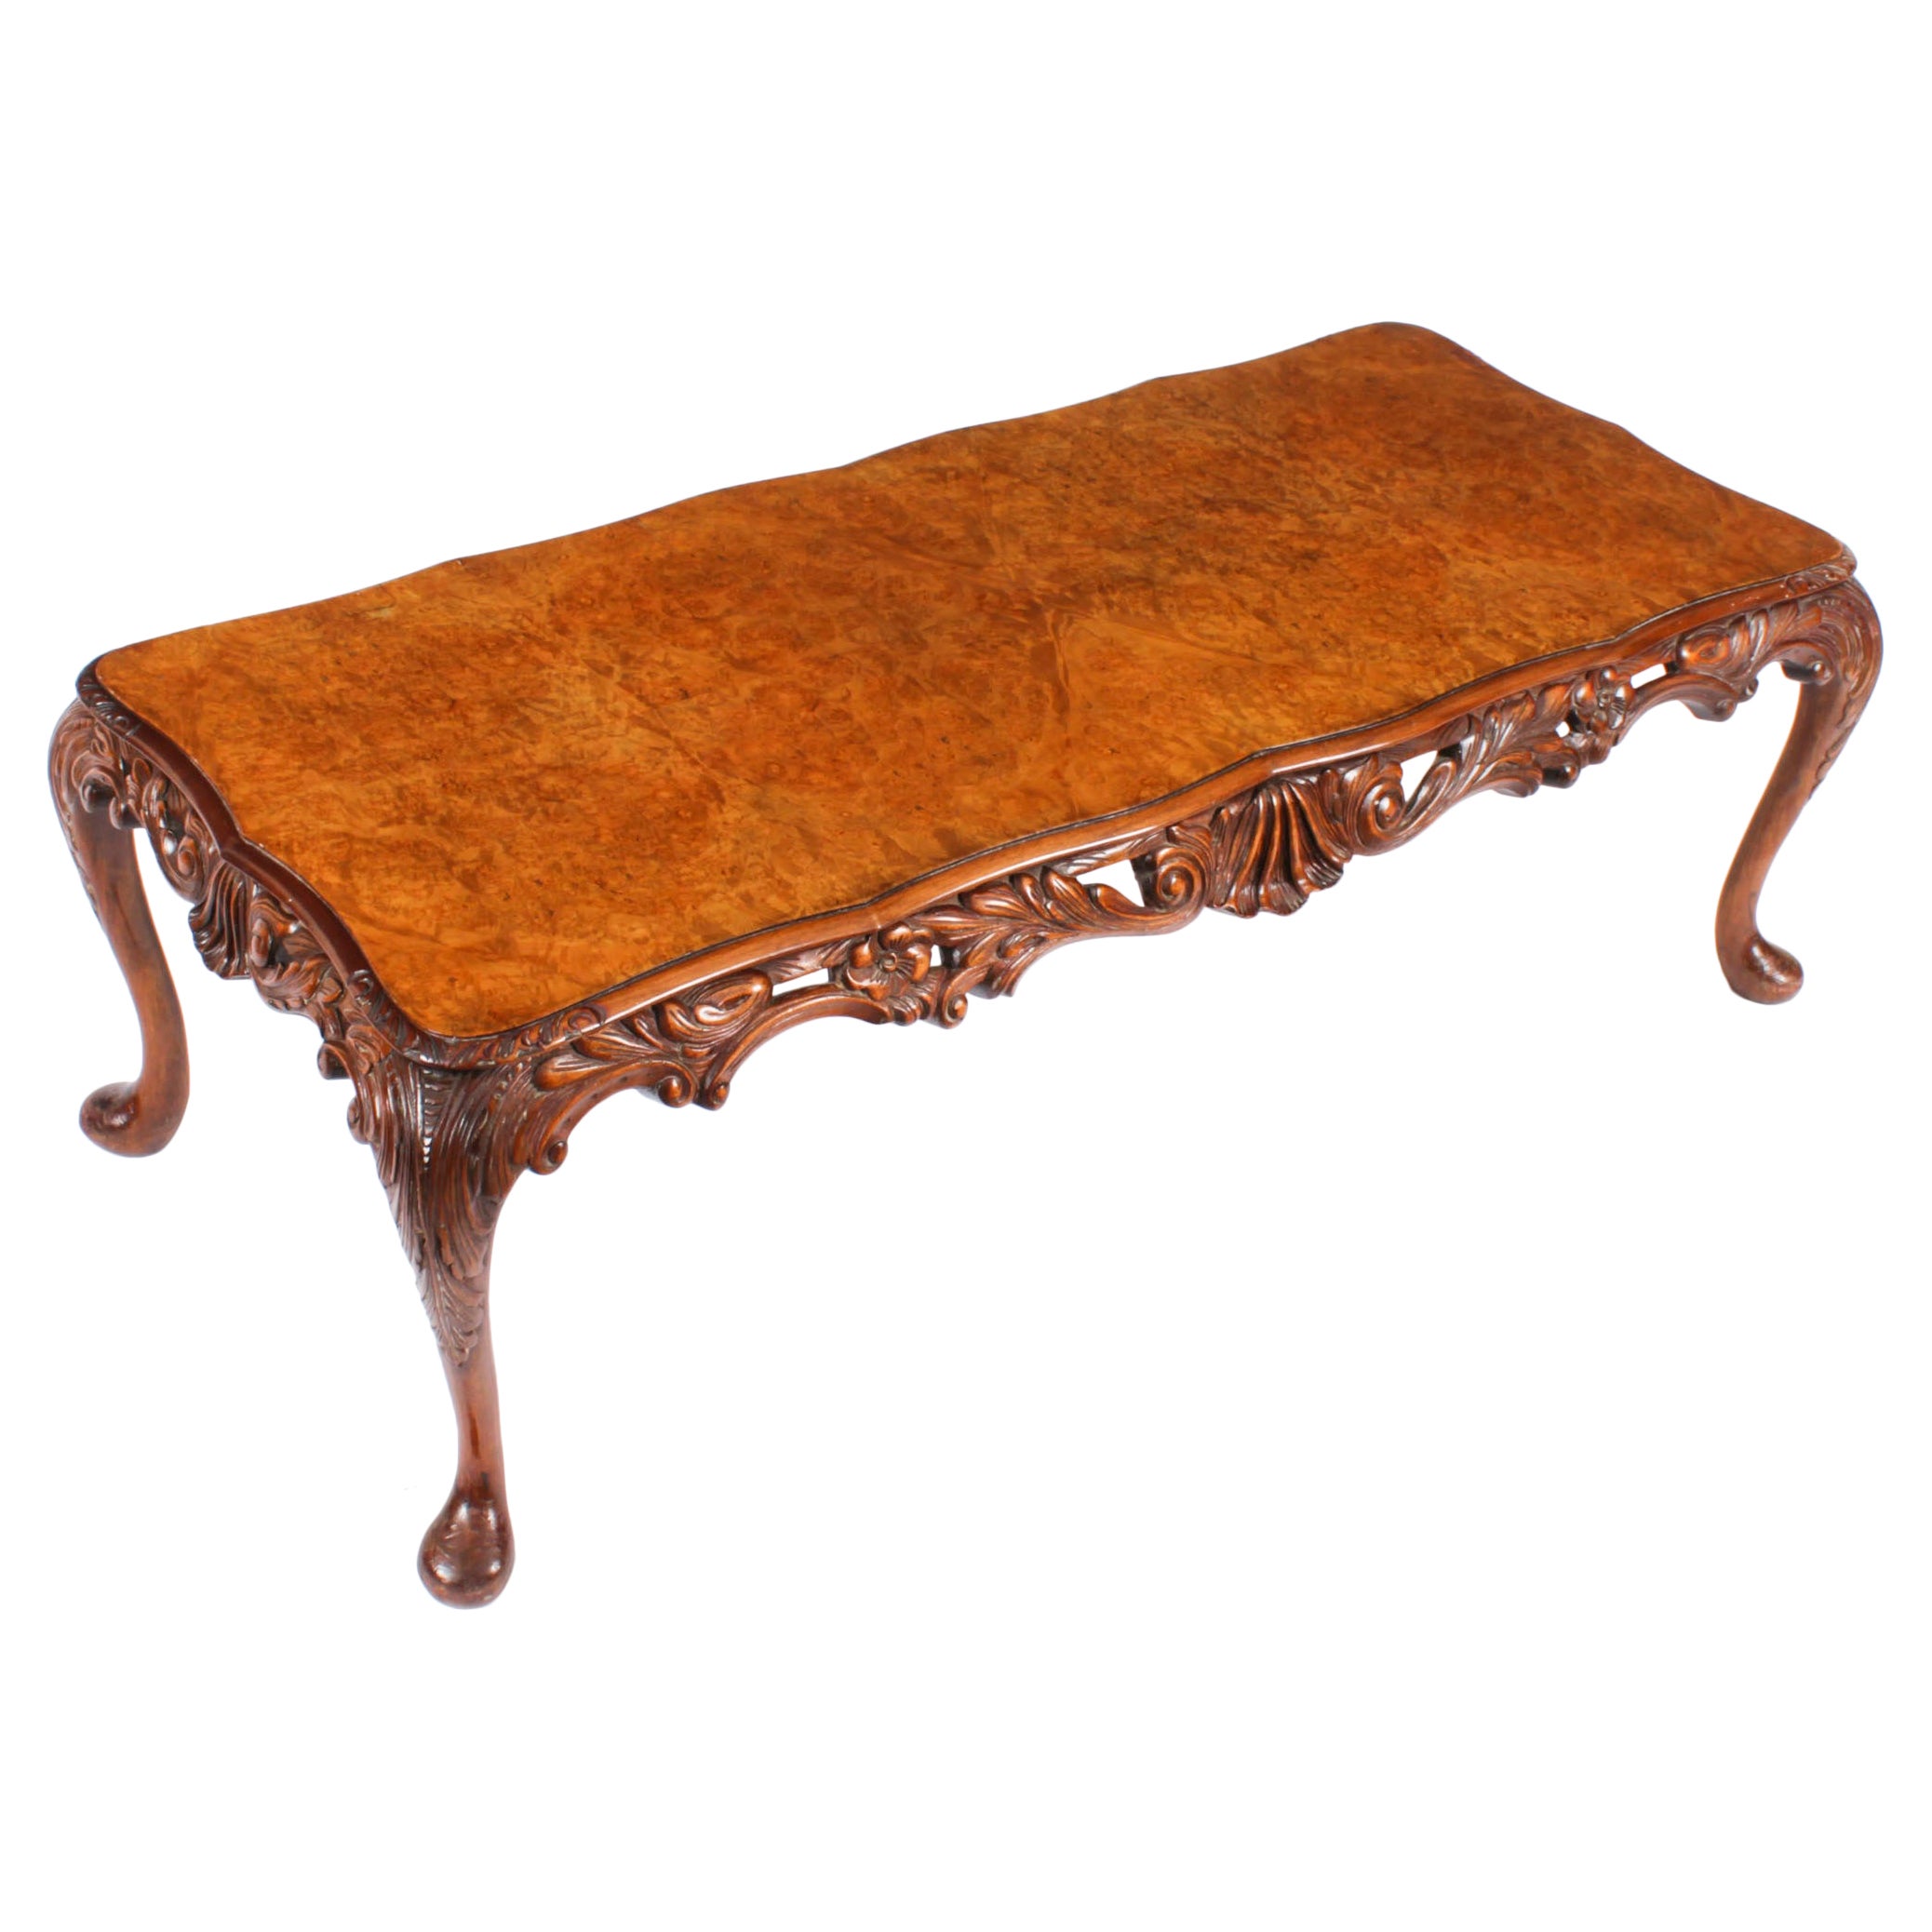 Antique Queen Anne Revival Burr Walnut Coffee Table c.1920 For Sale